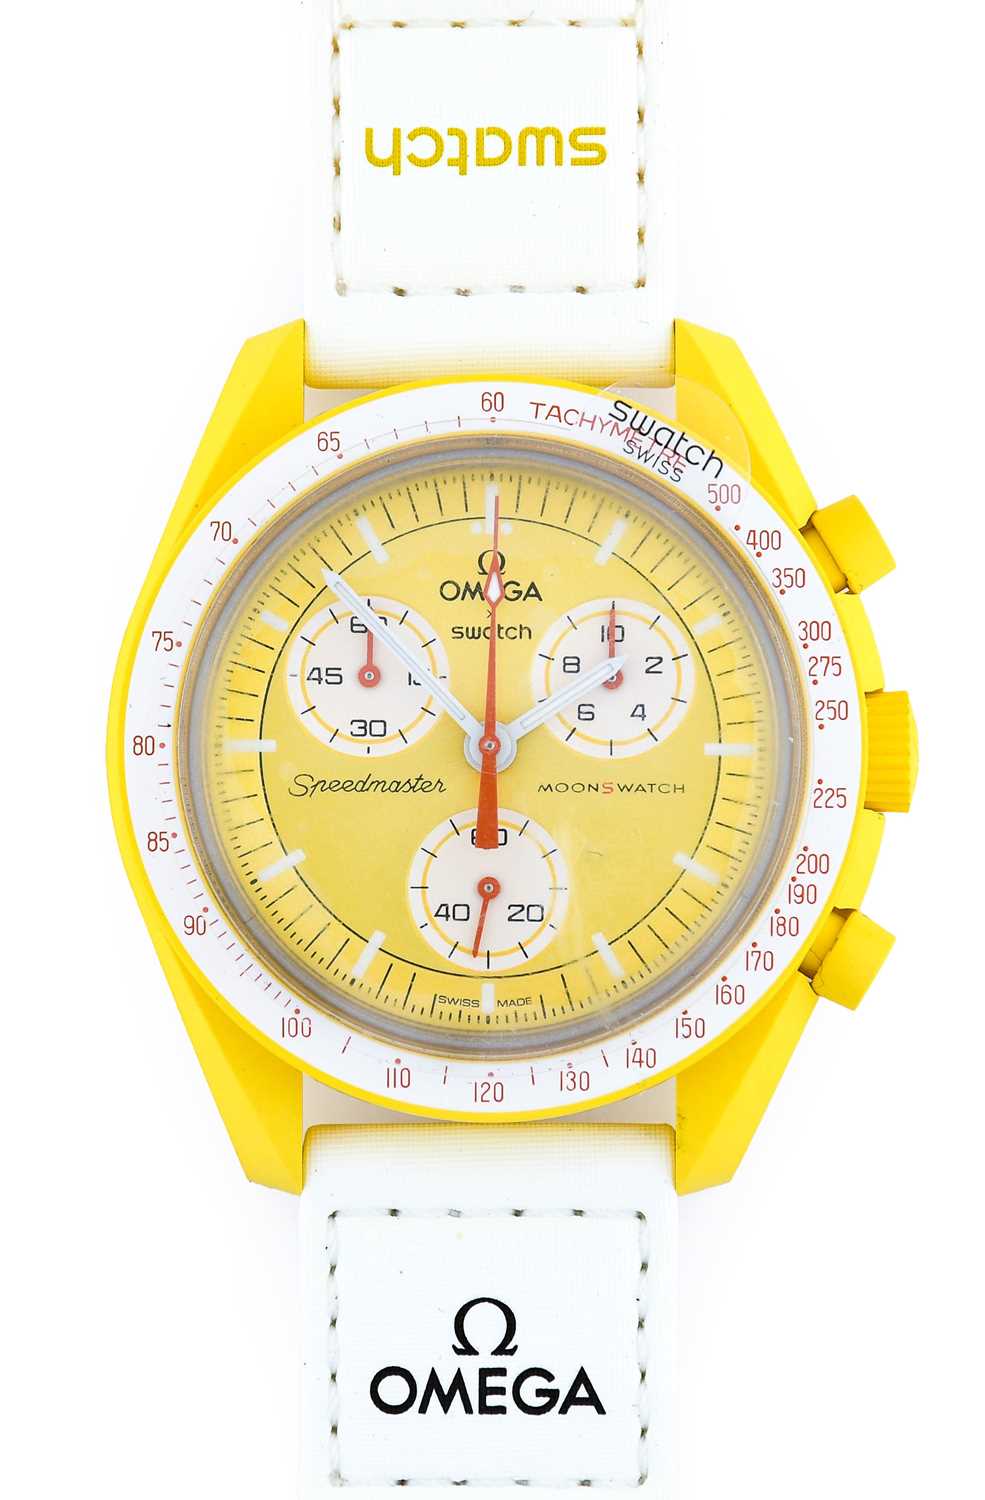 Omega X Swatch: A Bioceramic Chronograph Wristwatch, signed Omega X Swatch, model: Speedmaster